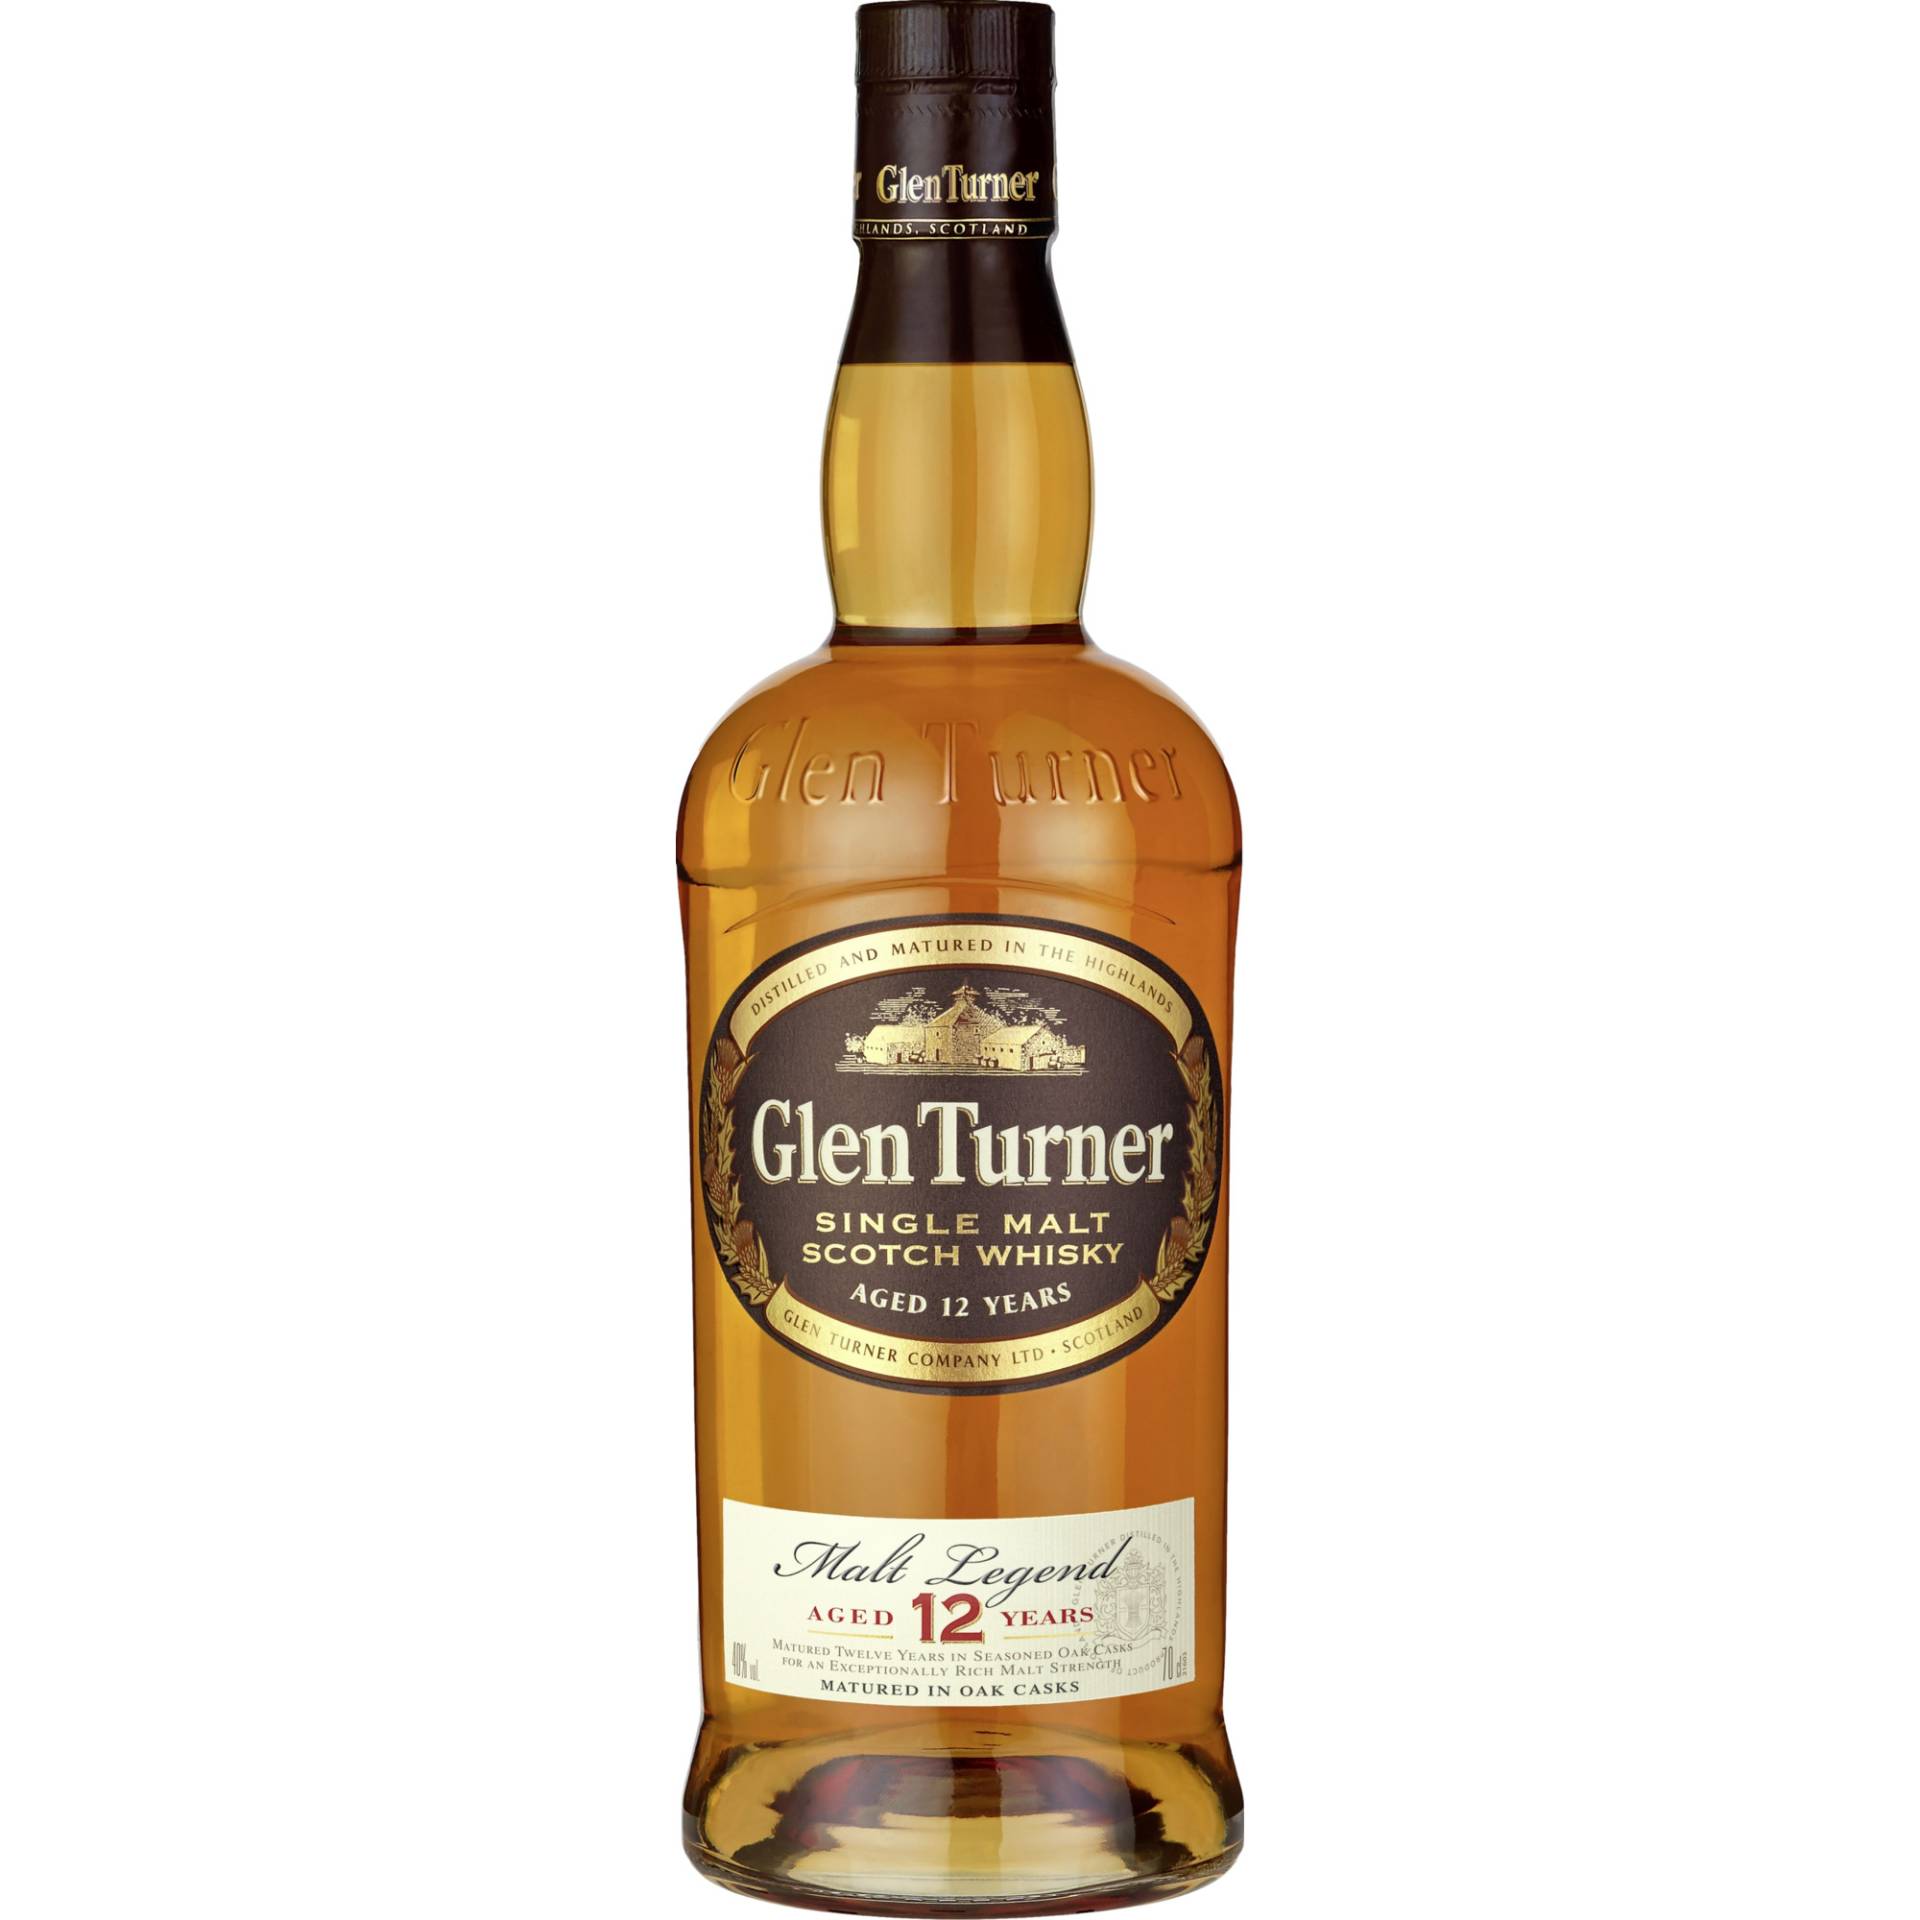 Glen Turner Single Malt Scotch Master Reserve, aged 12 years, 40% Vol. 0,7l, Spirituosen von Société des Vins et Spiritueux LM 94220 Charenton France